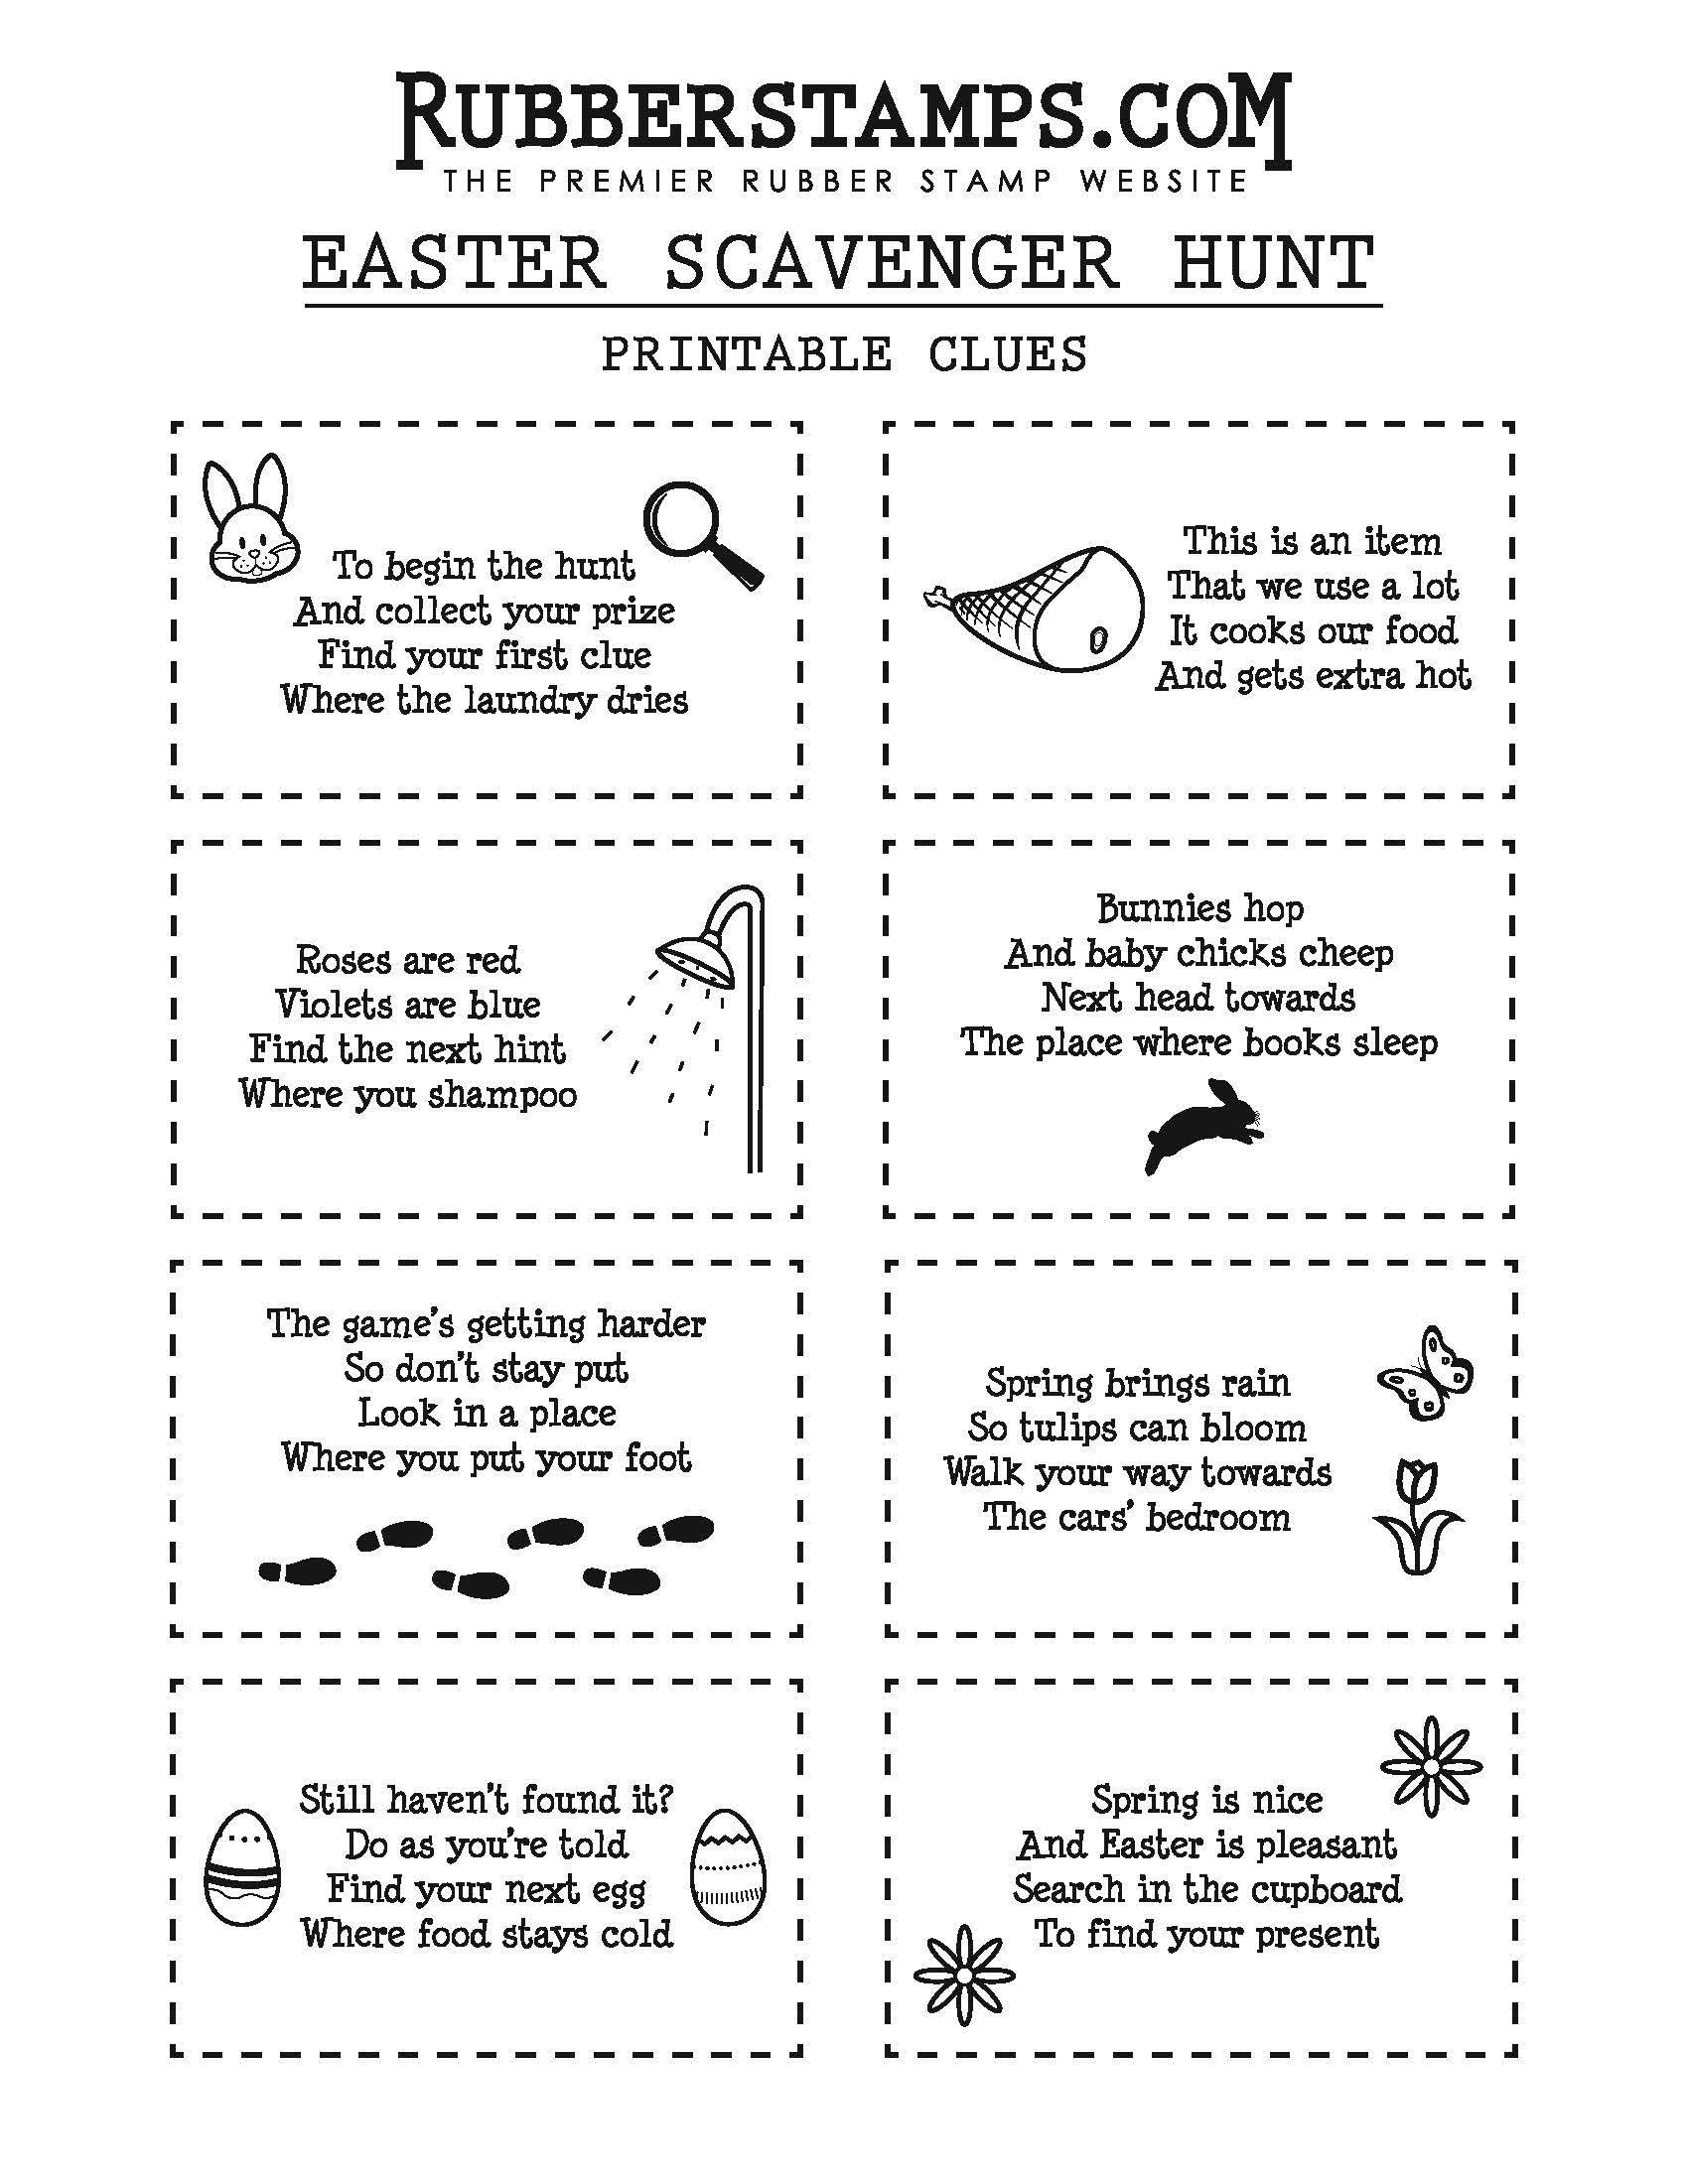 DIY Easter Scavenger Hunt Clues + Free Printable  RubberStamps.com